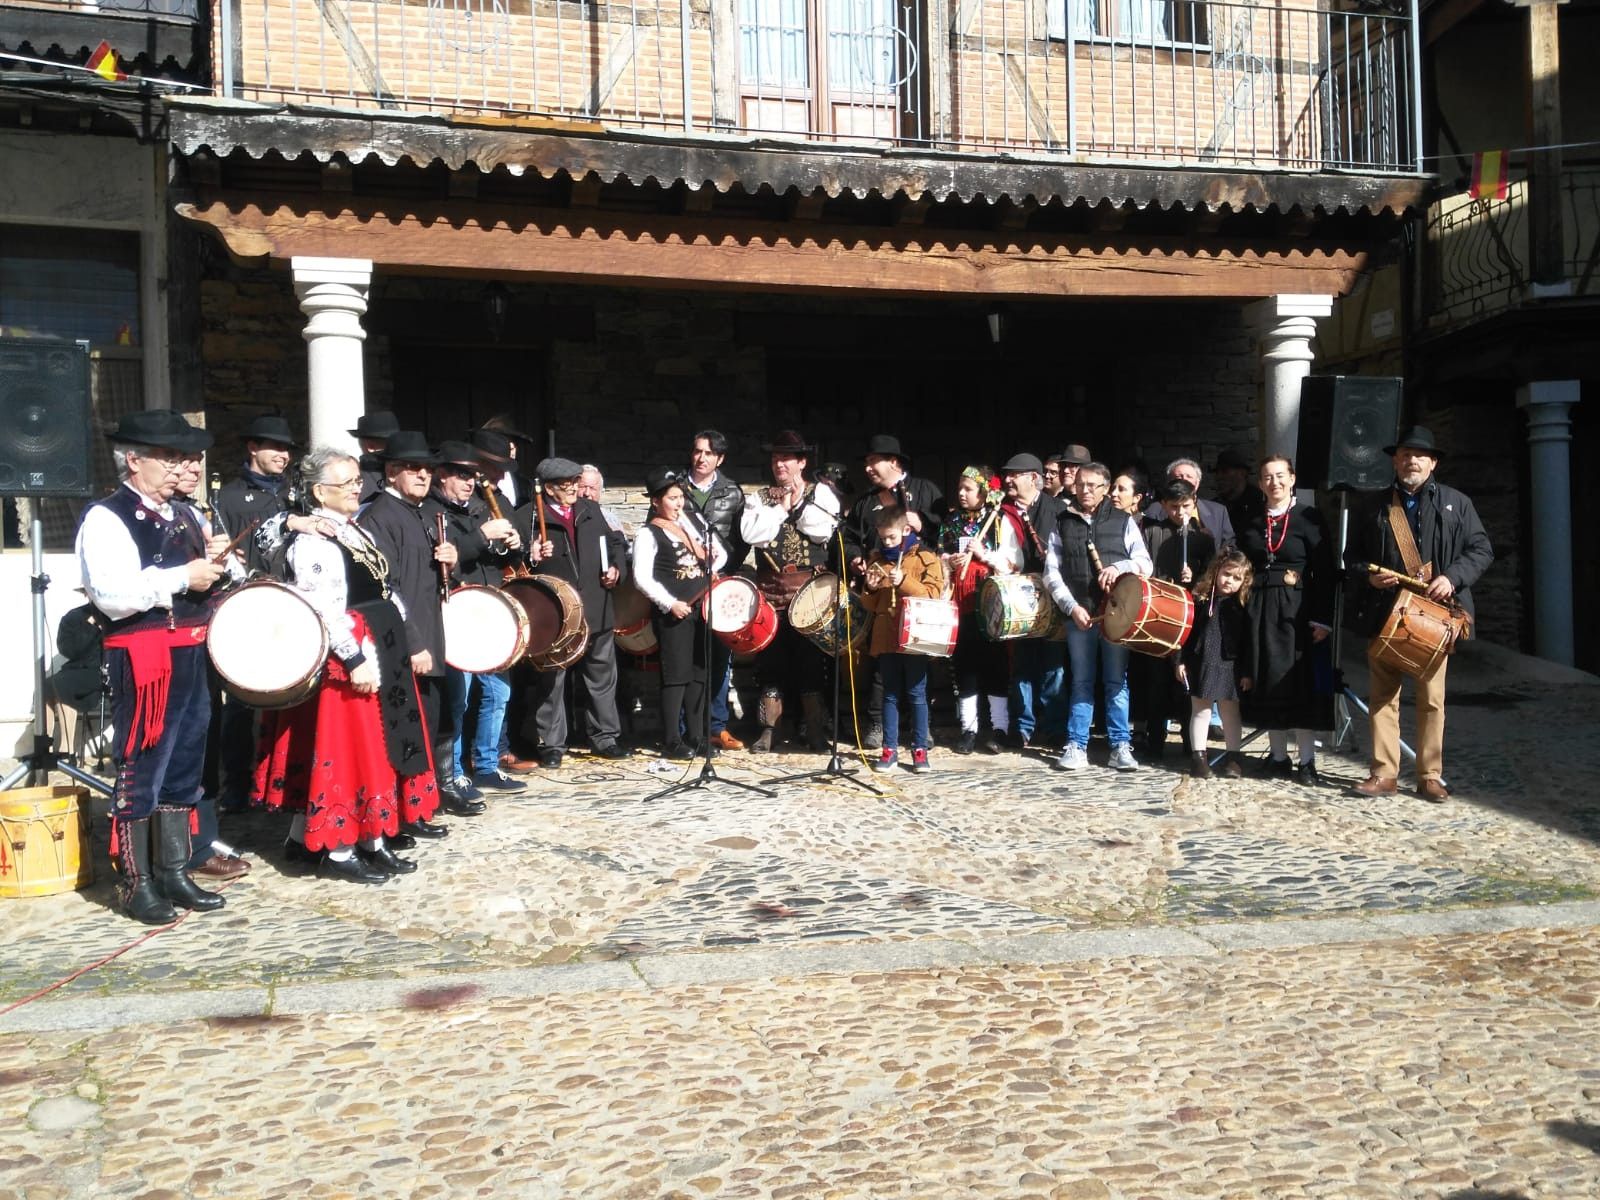  Festival de tamborileros en valero (2) 